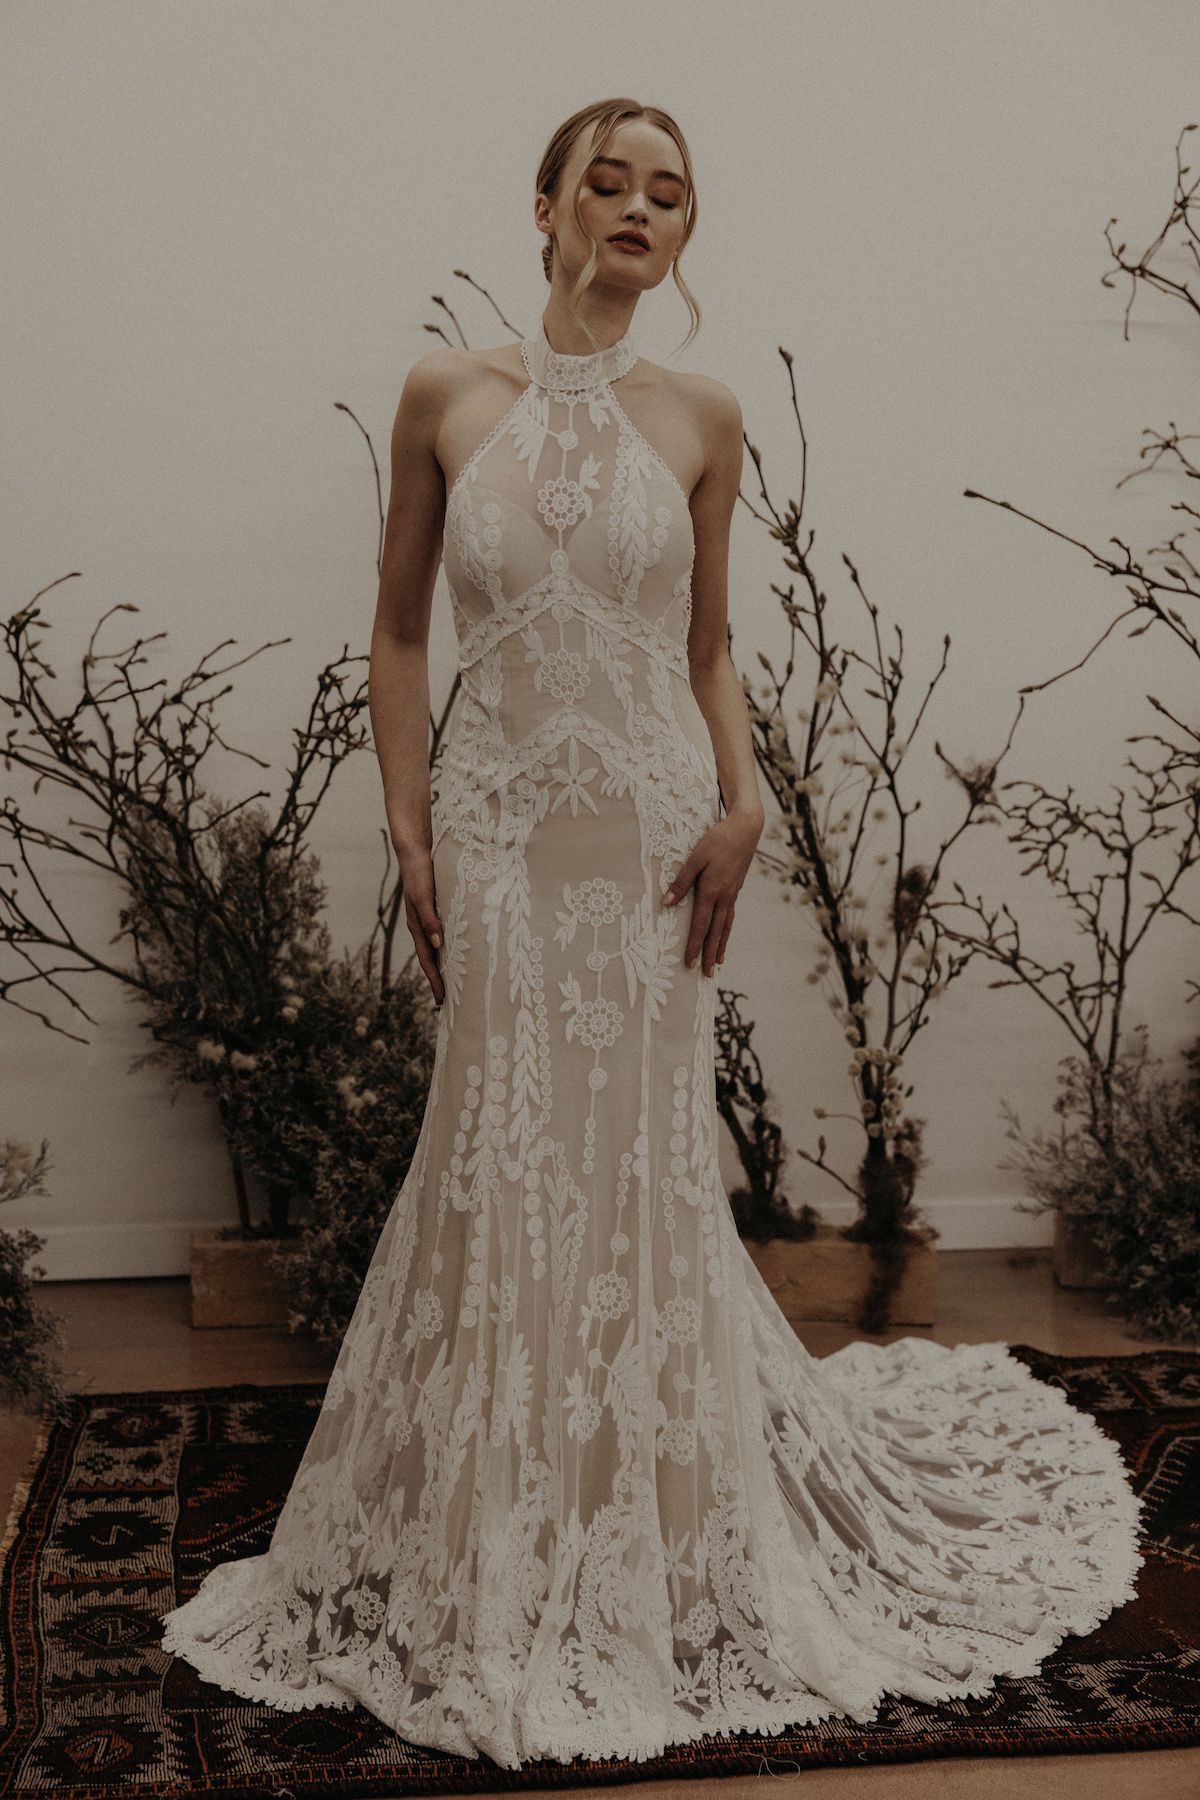 Choosing the Right Lace Halter Wedding Dress